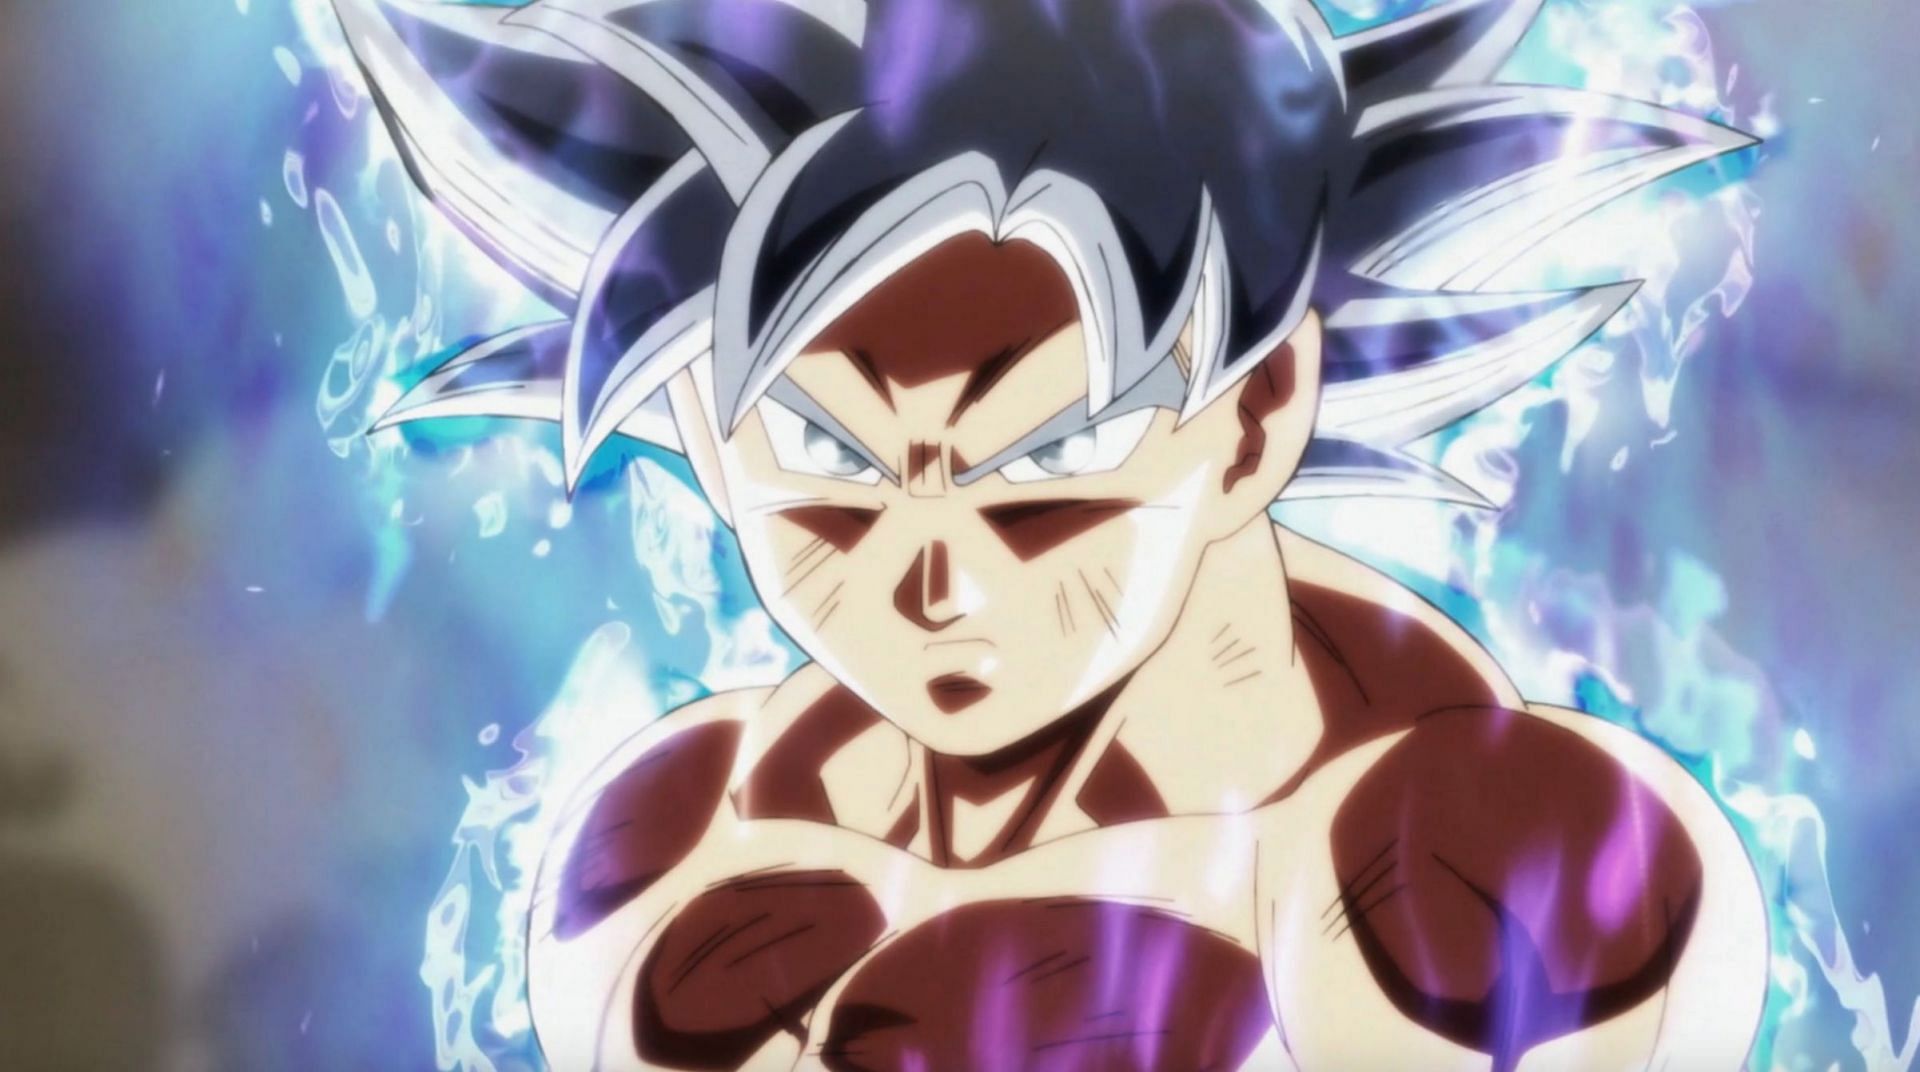 Ultra Instinct Goku from the anime (image via Toei Animation)